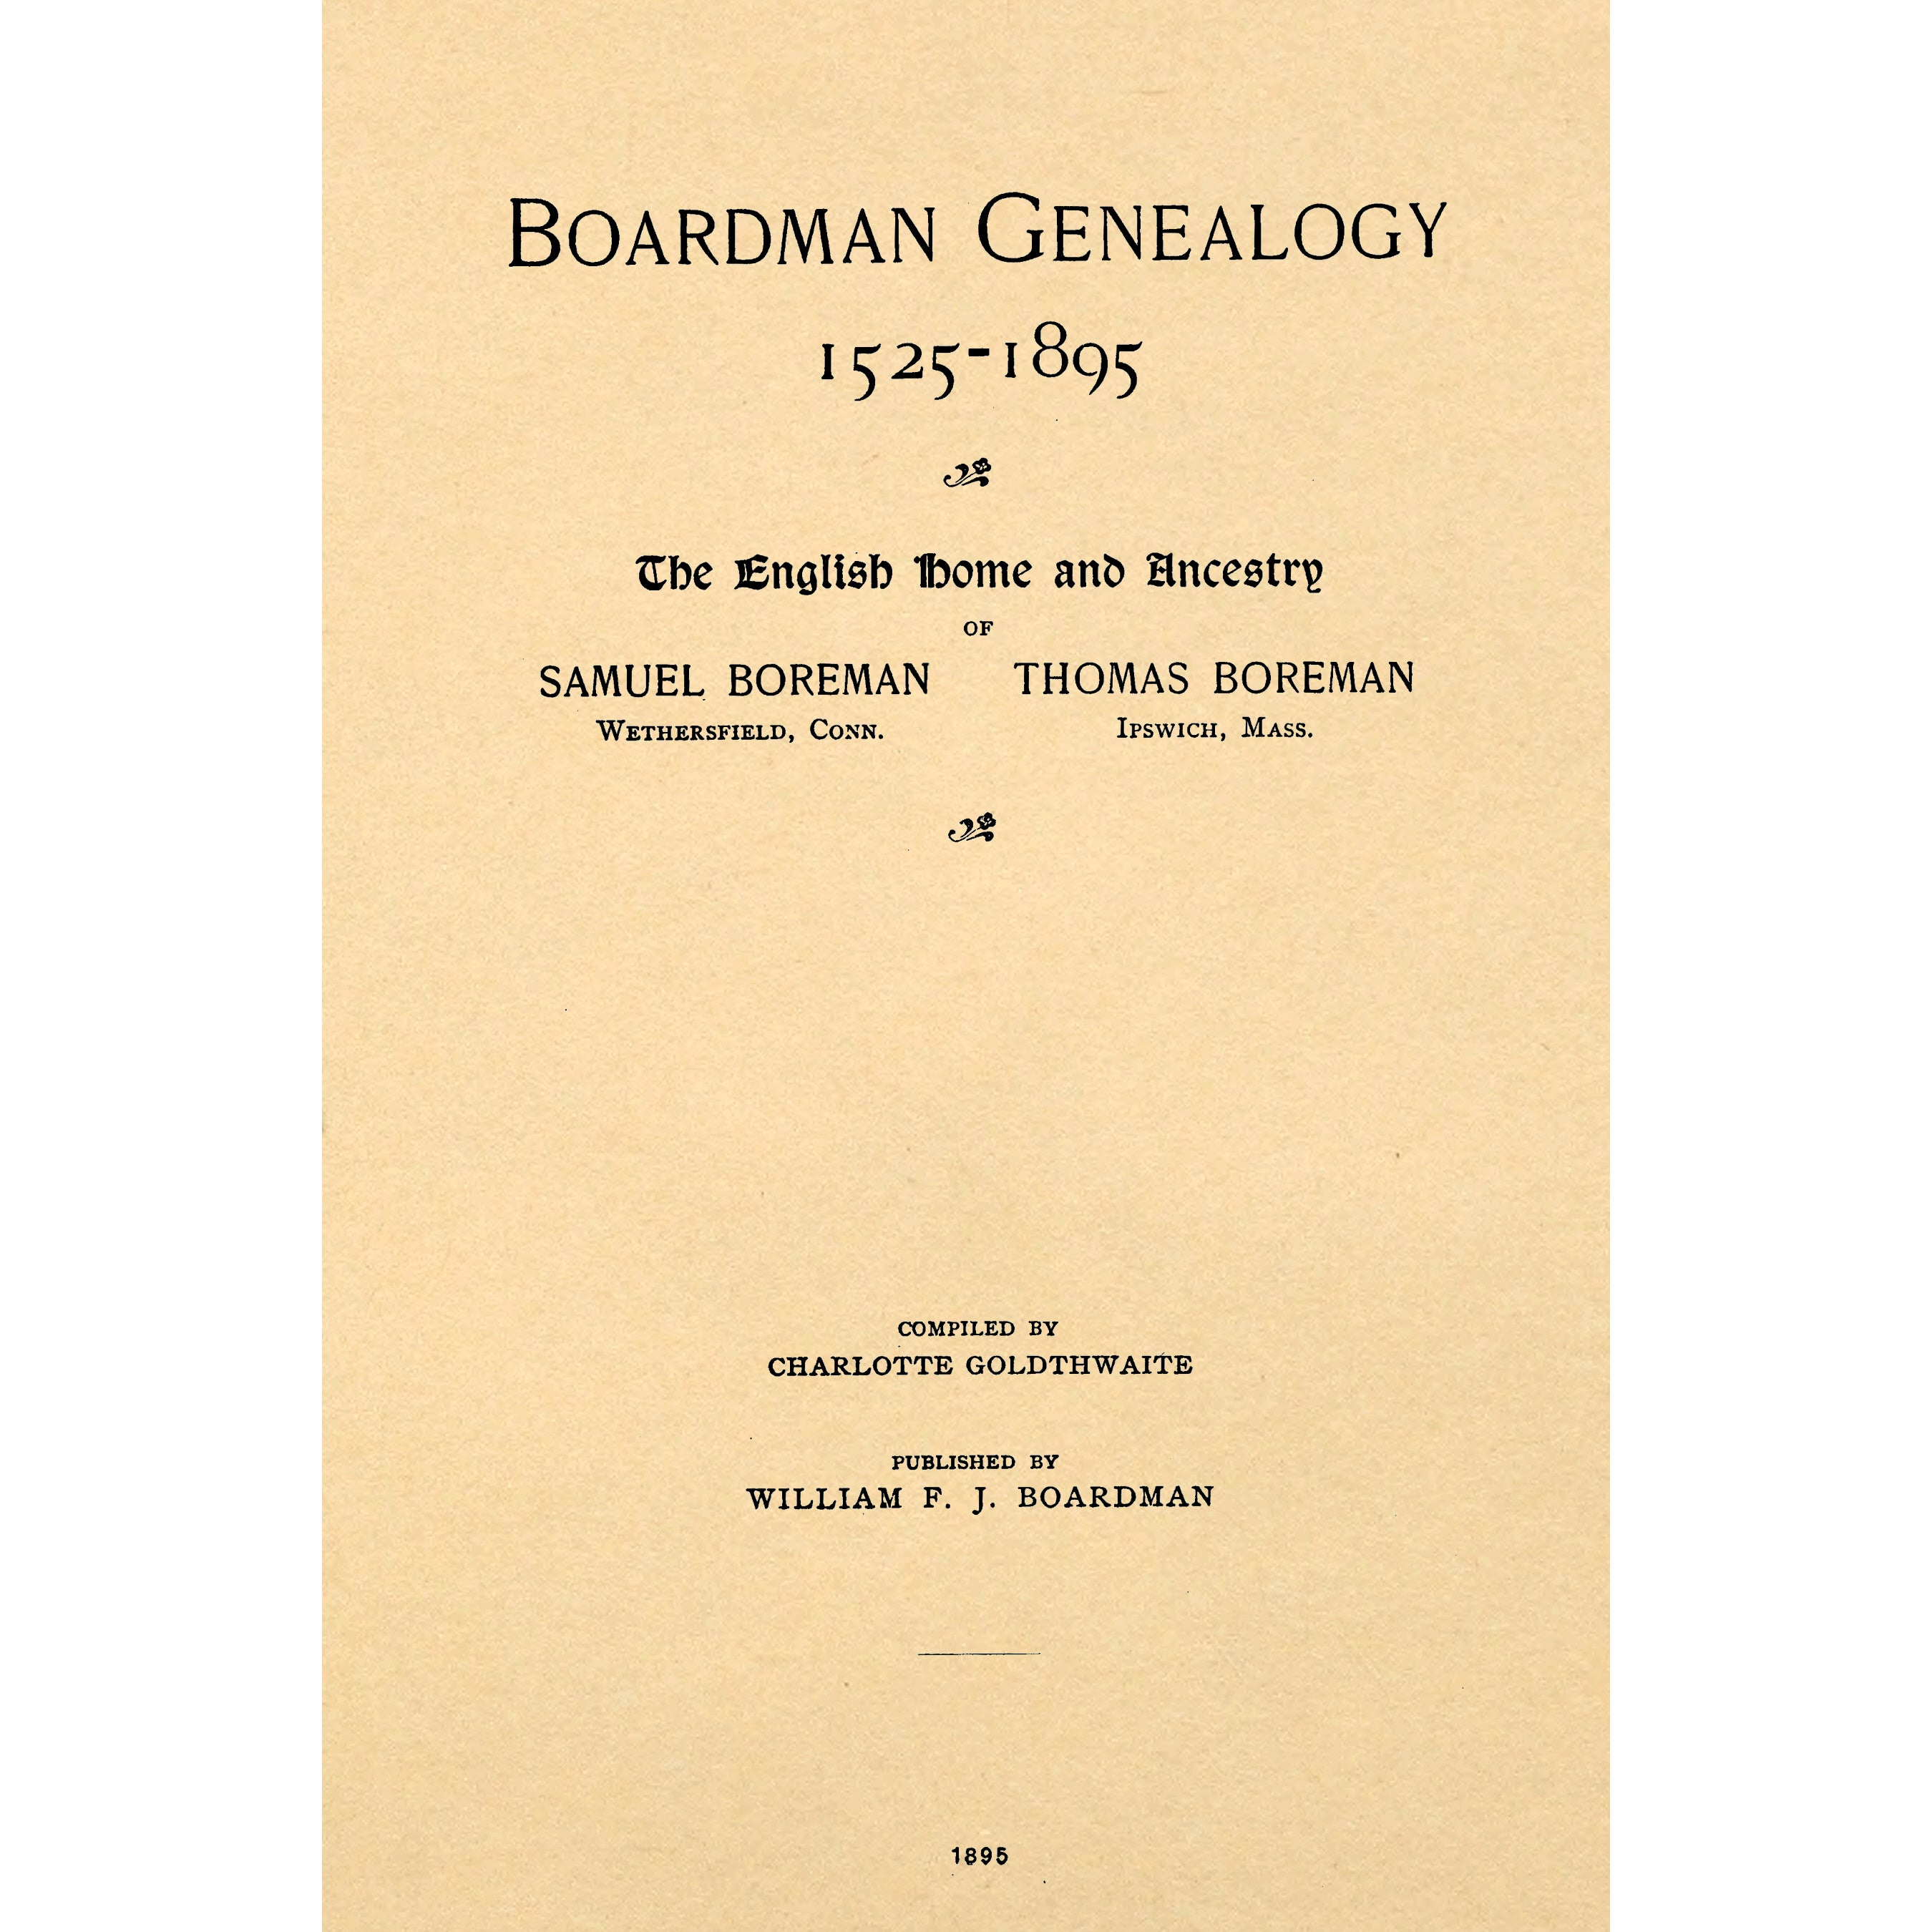 The ancestry of William Francis Joseph Boardman, Hartford, Connecticut;